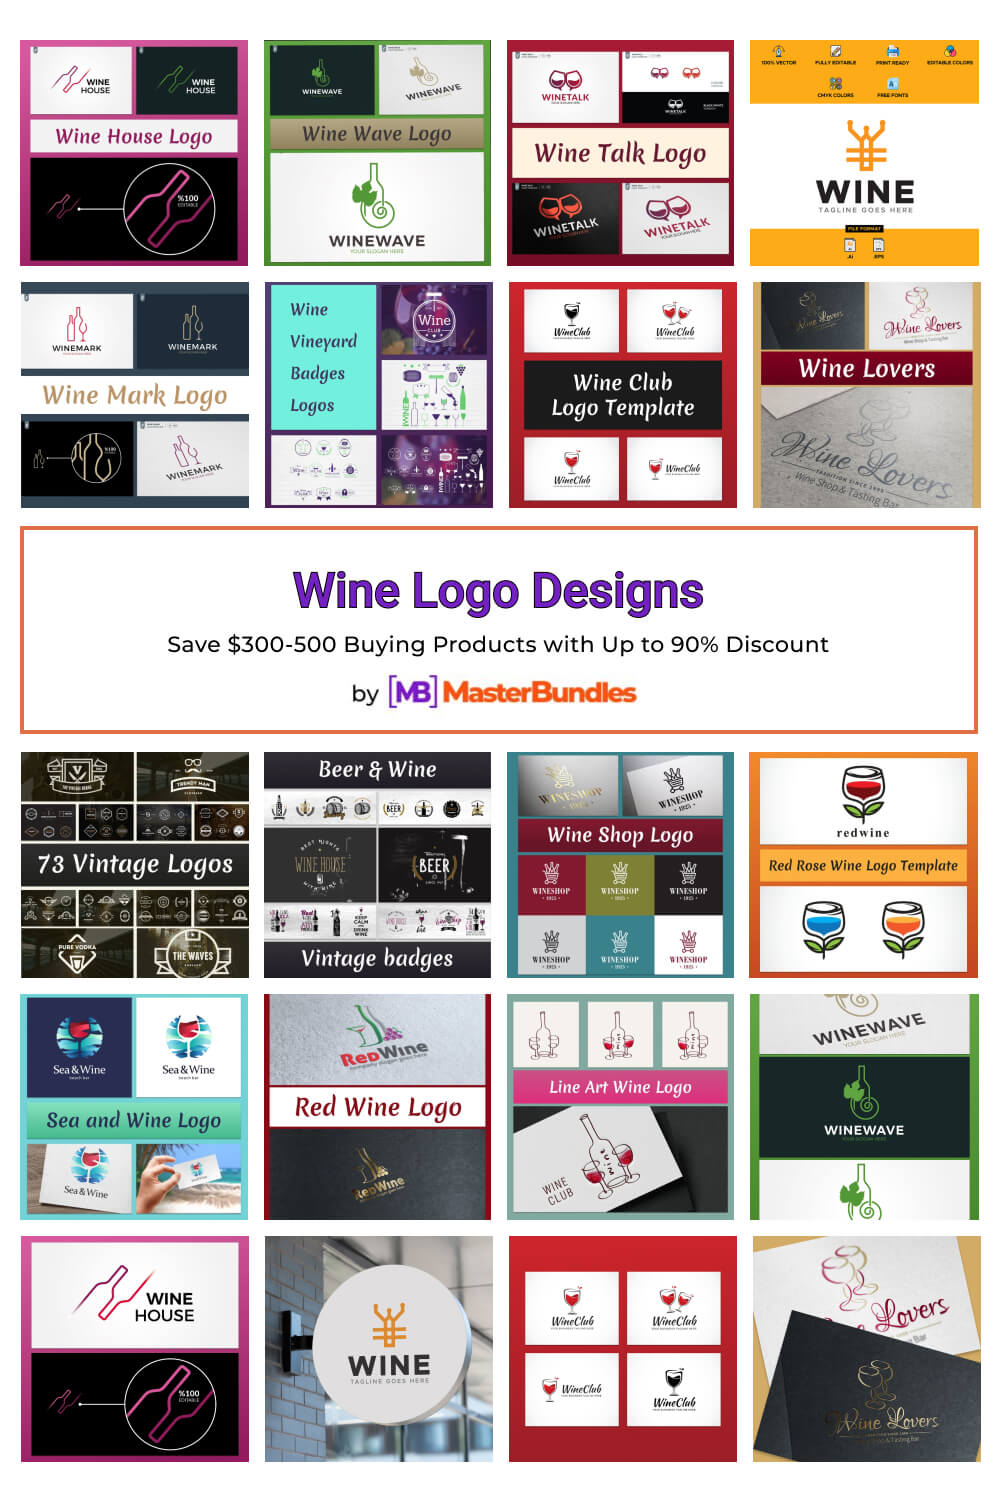 wine logo designs pinterest image.